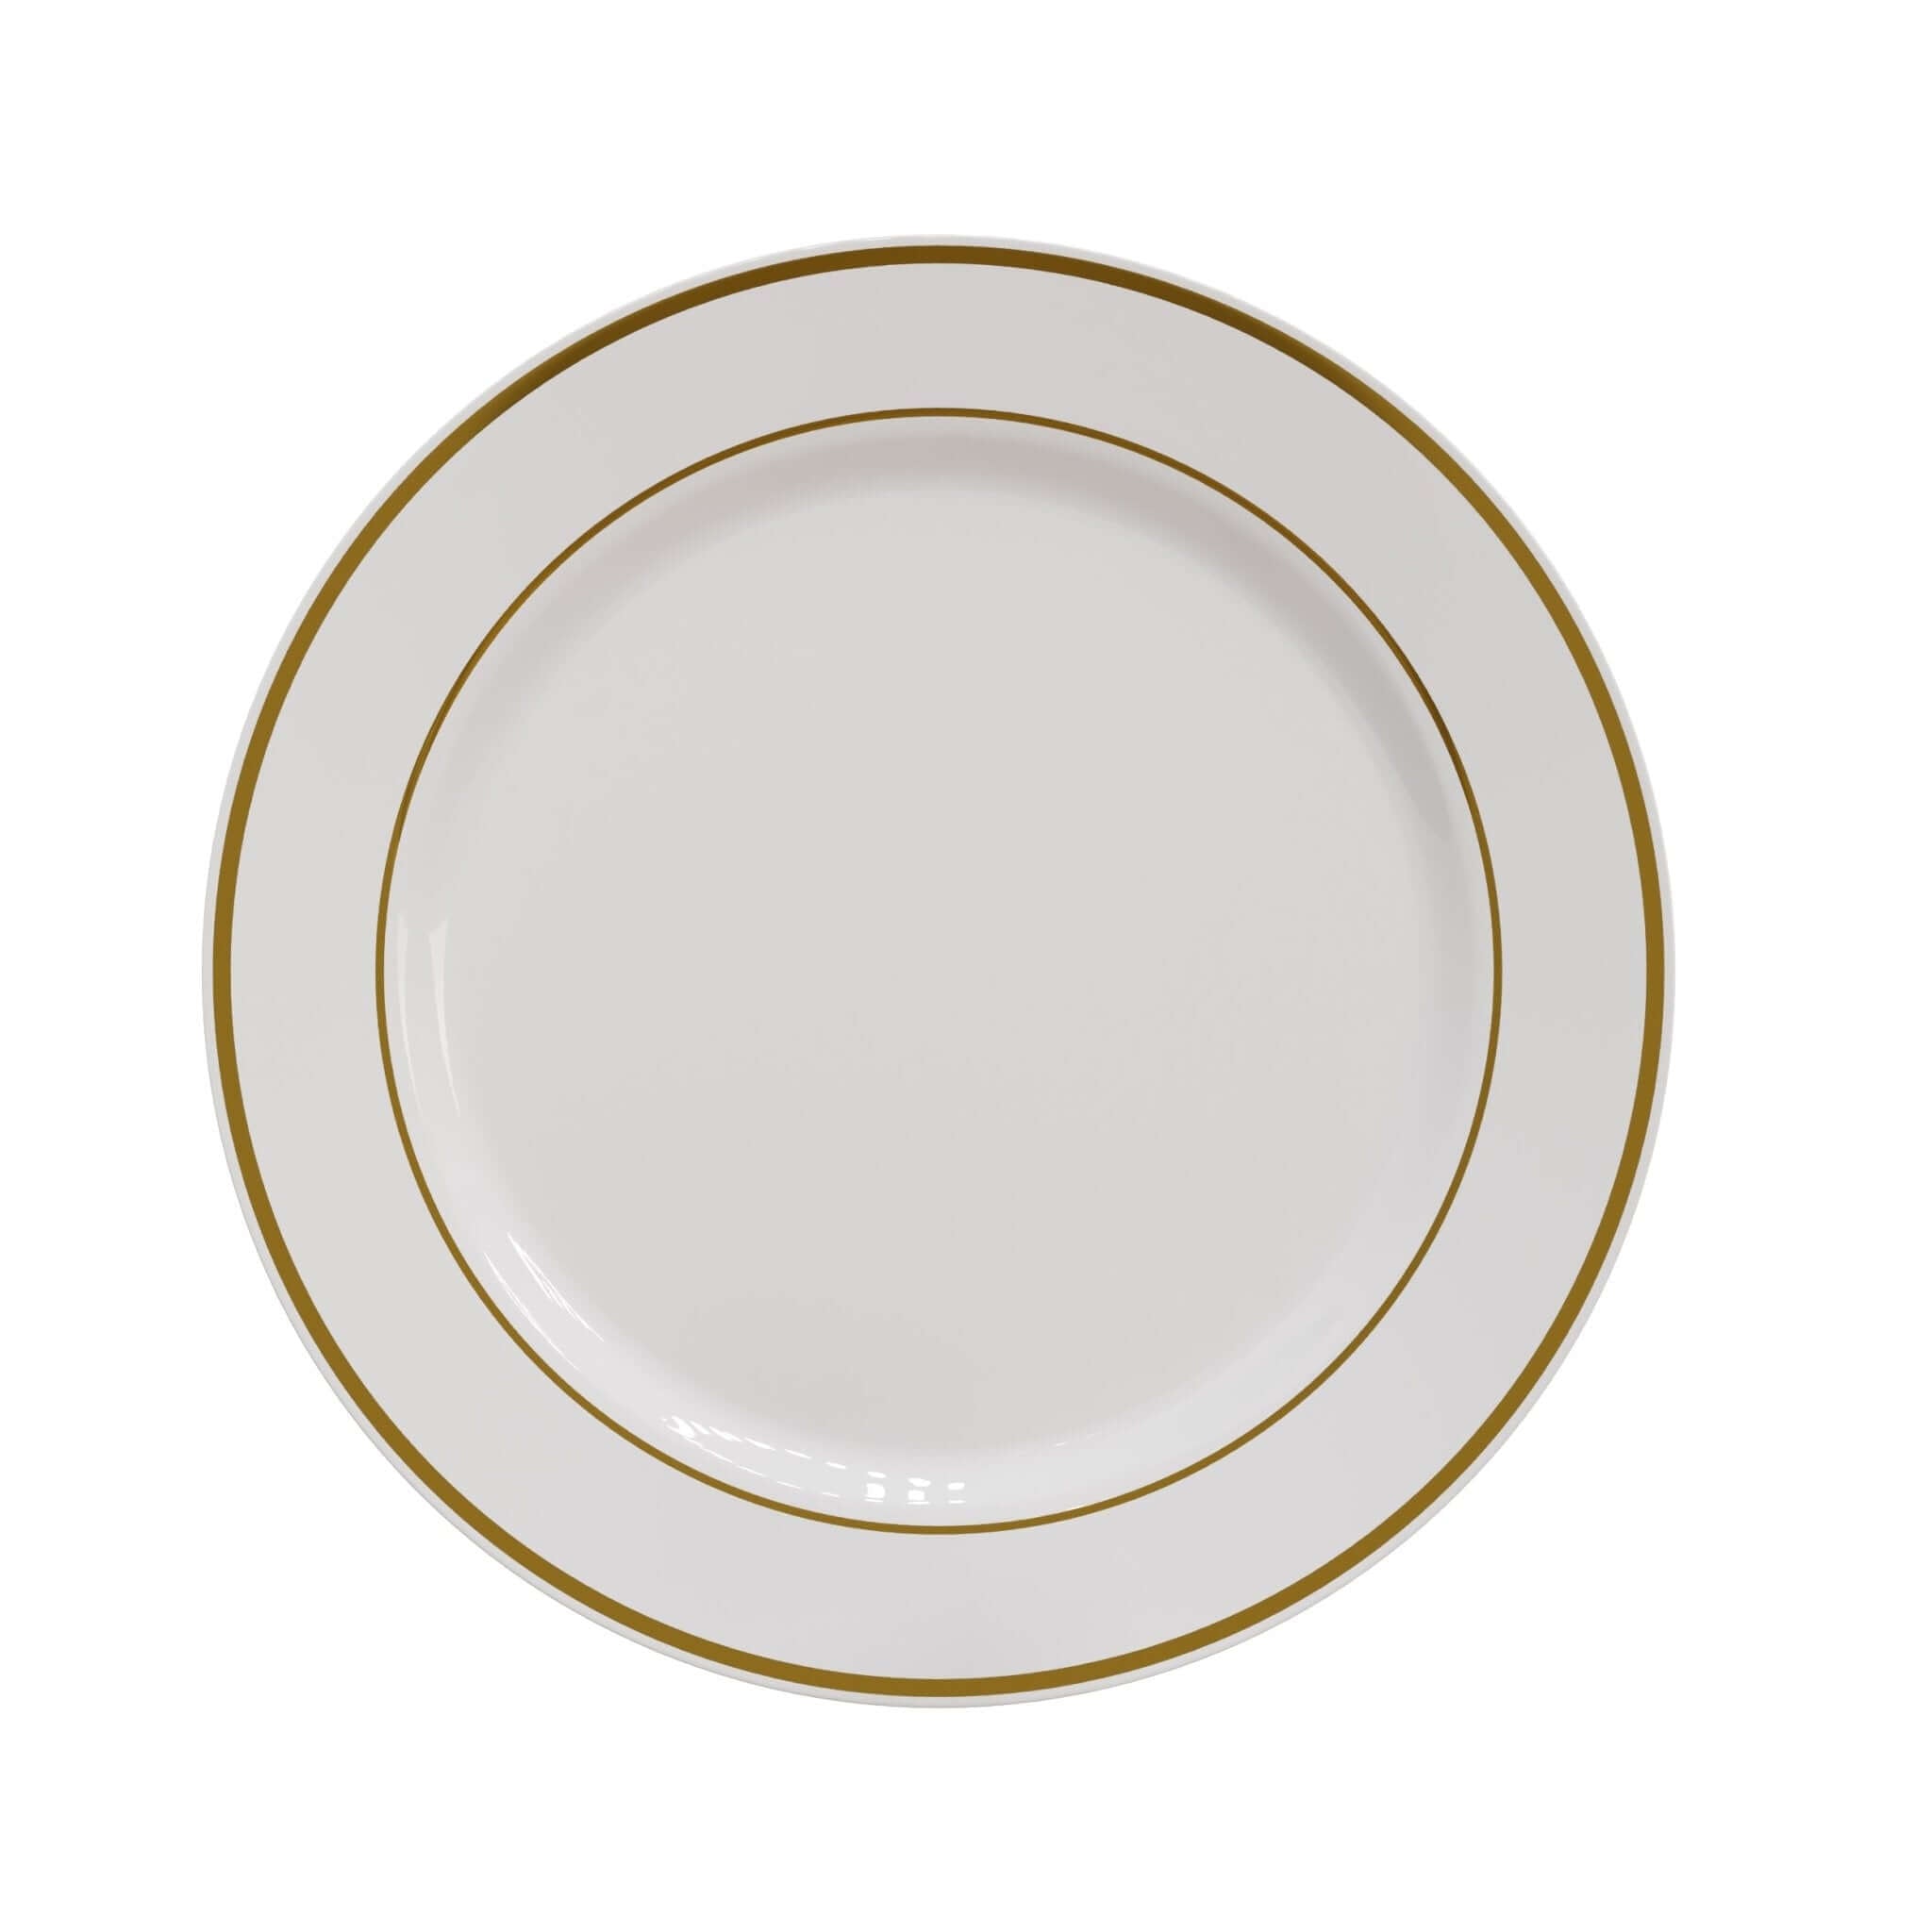 10.25" White/Gold Line Design Plastic Plates (120 Count) - Yom Tov Settings